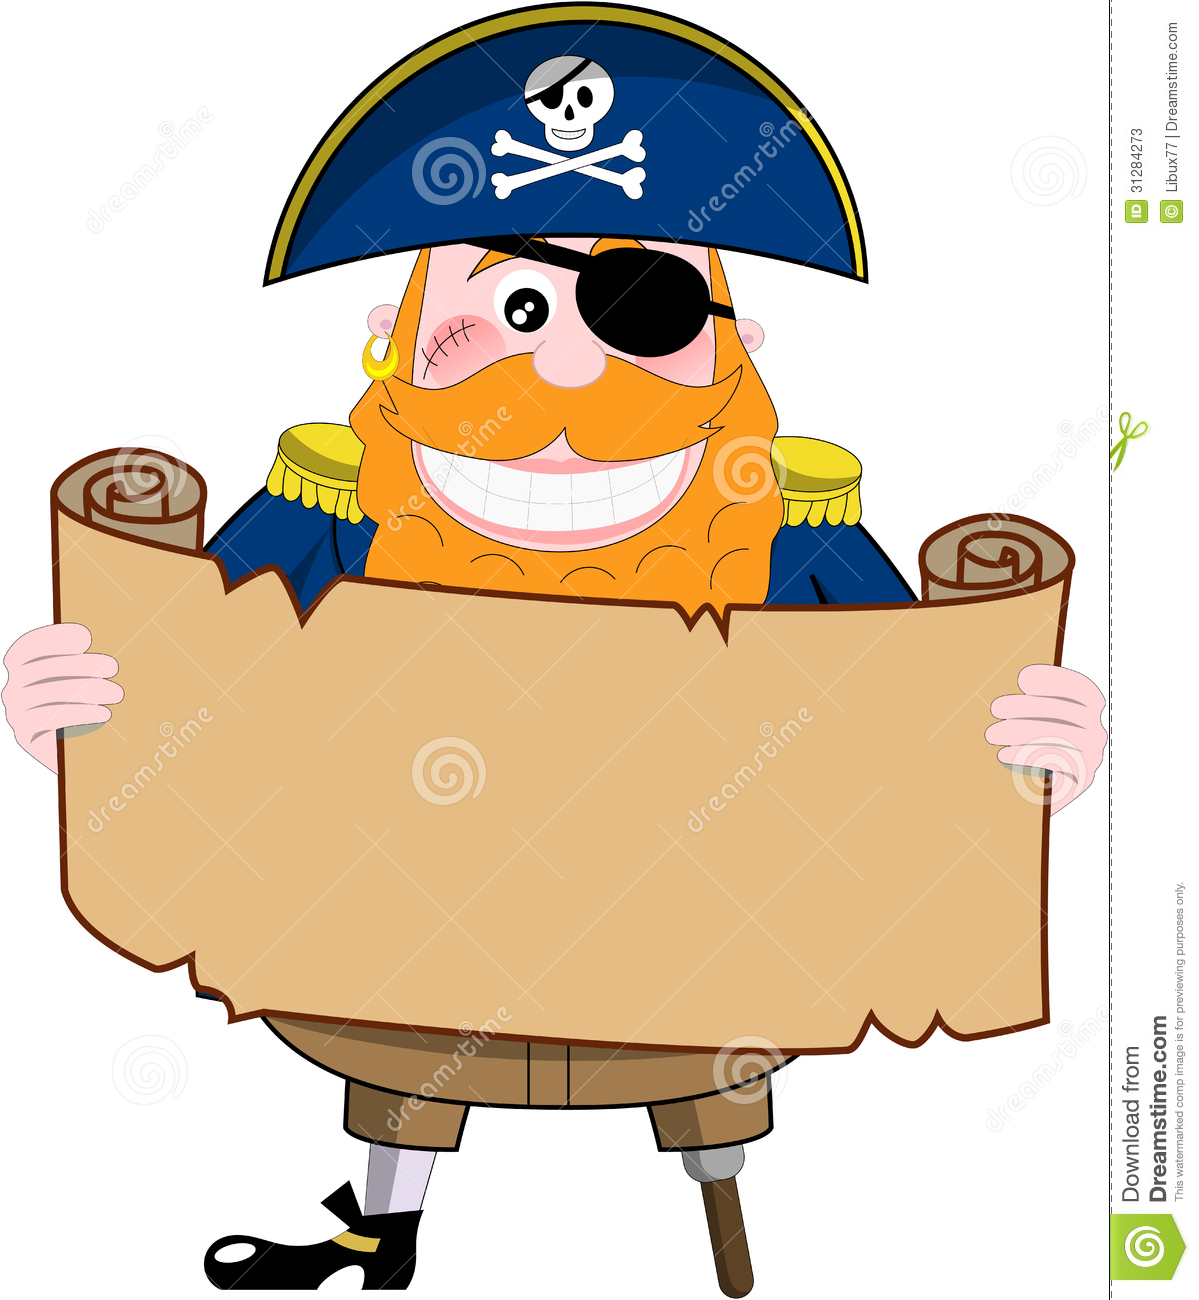 Funny Pirate Looking At Treasure Map Stock Photos   Image  31284273